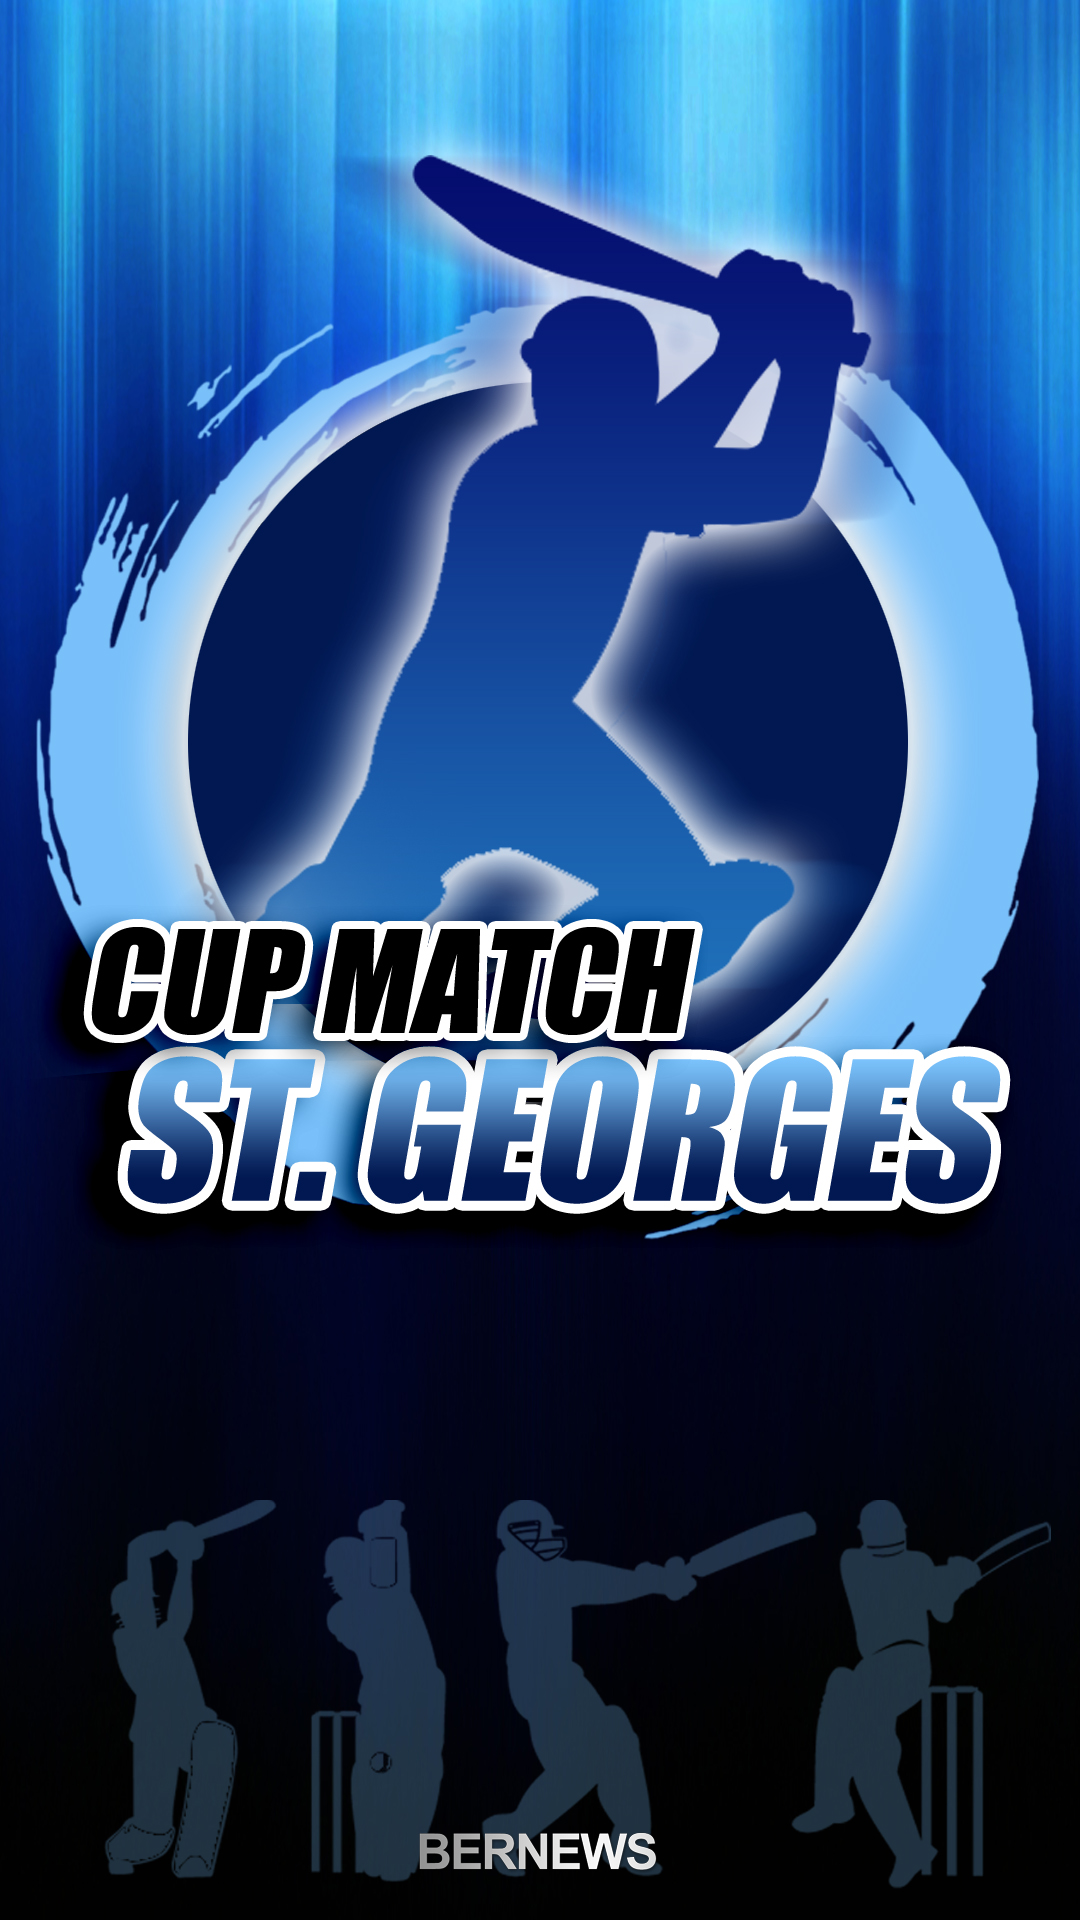 Bermuda Free Cup Match Iphone Wallpaper Graphics St - St George's Cup Match Bermuda - HD Wallpaper 